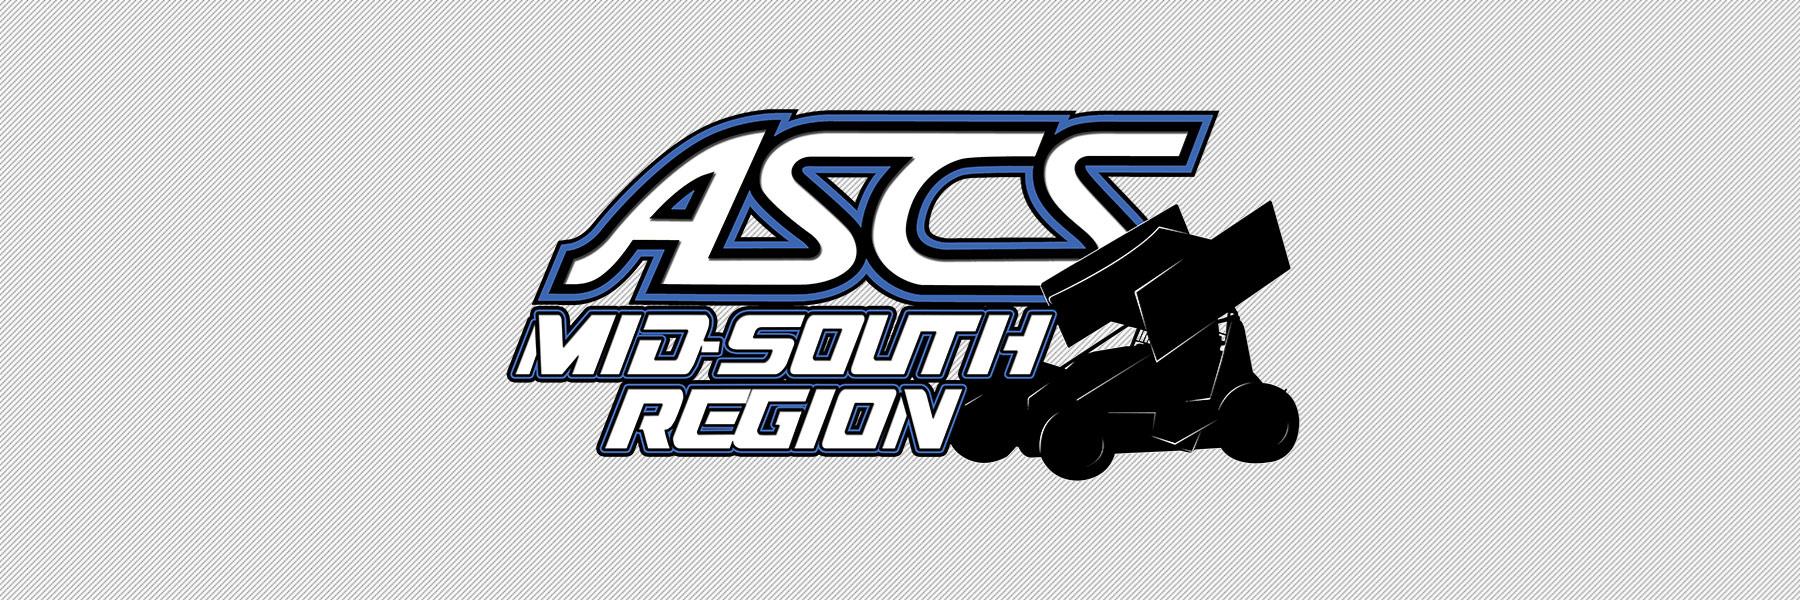 ASCS Mid-South Region